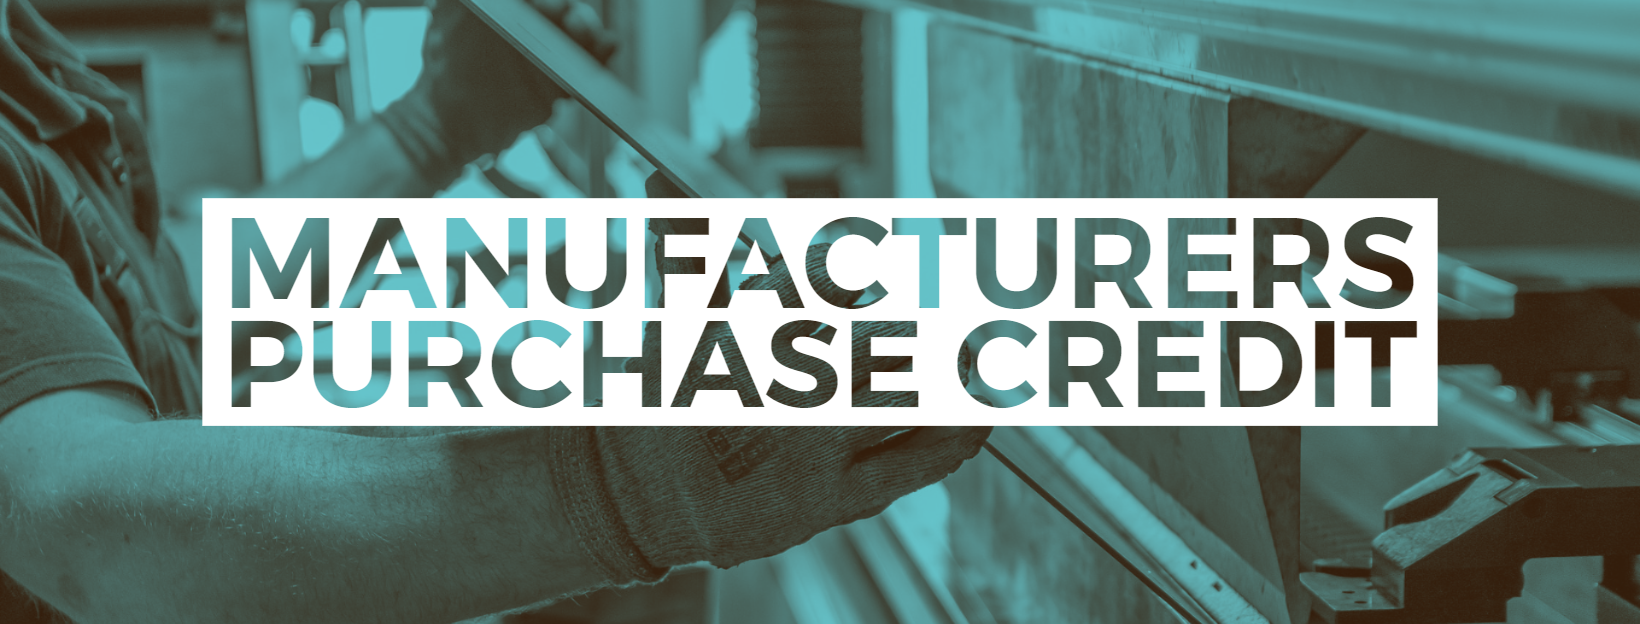 Illinois Reinstates Manufacturers Purchase Credit